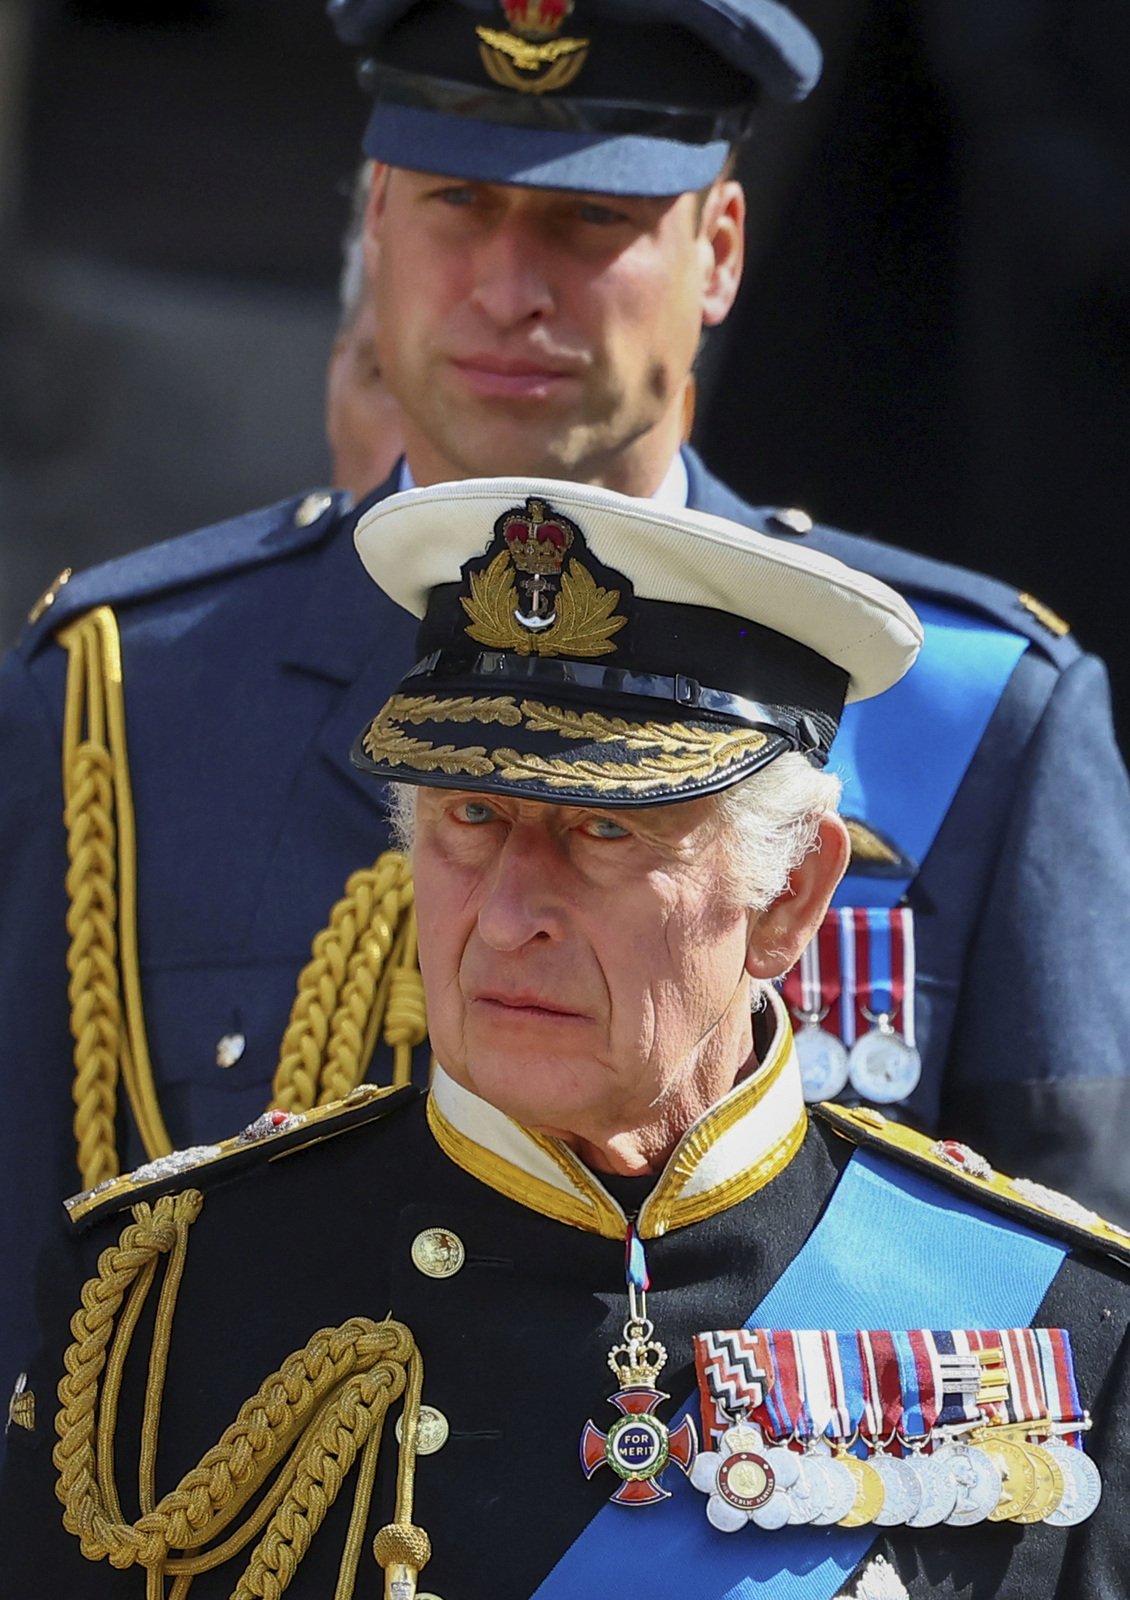 Král Karel III.